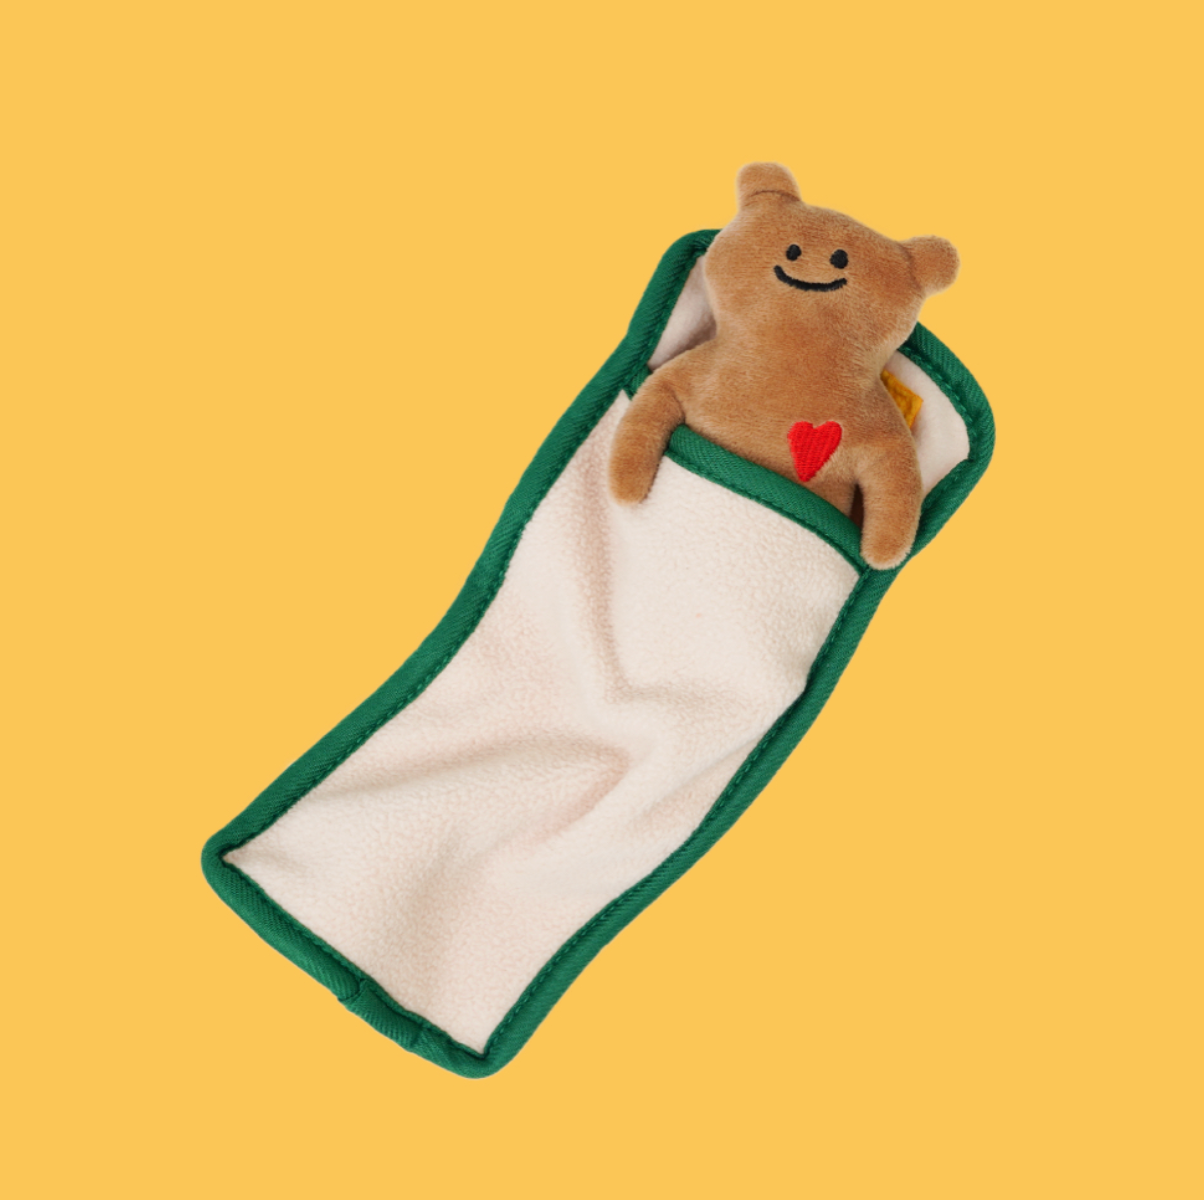 Sleeping Teddy Bear Pet Toy